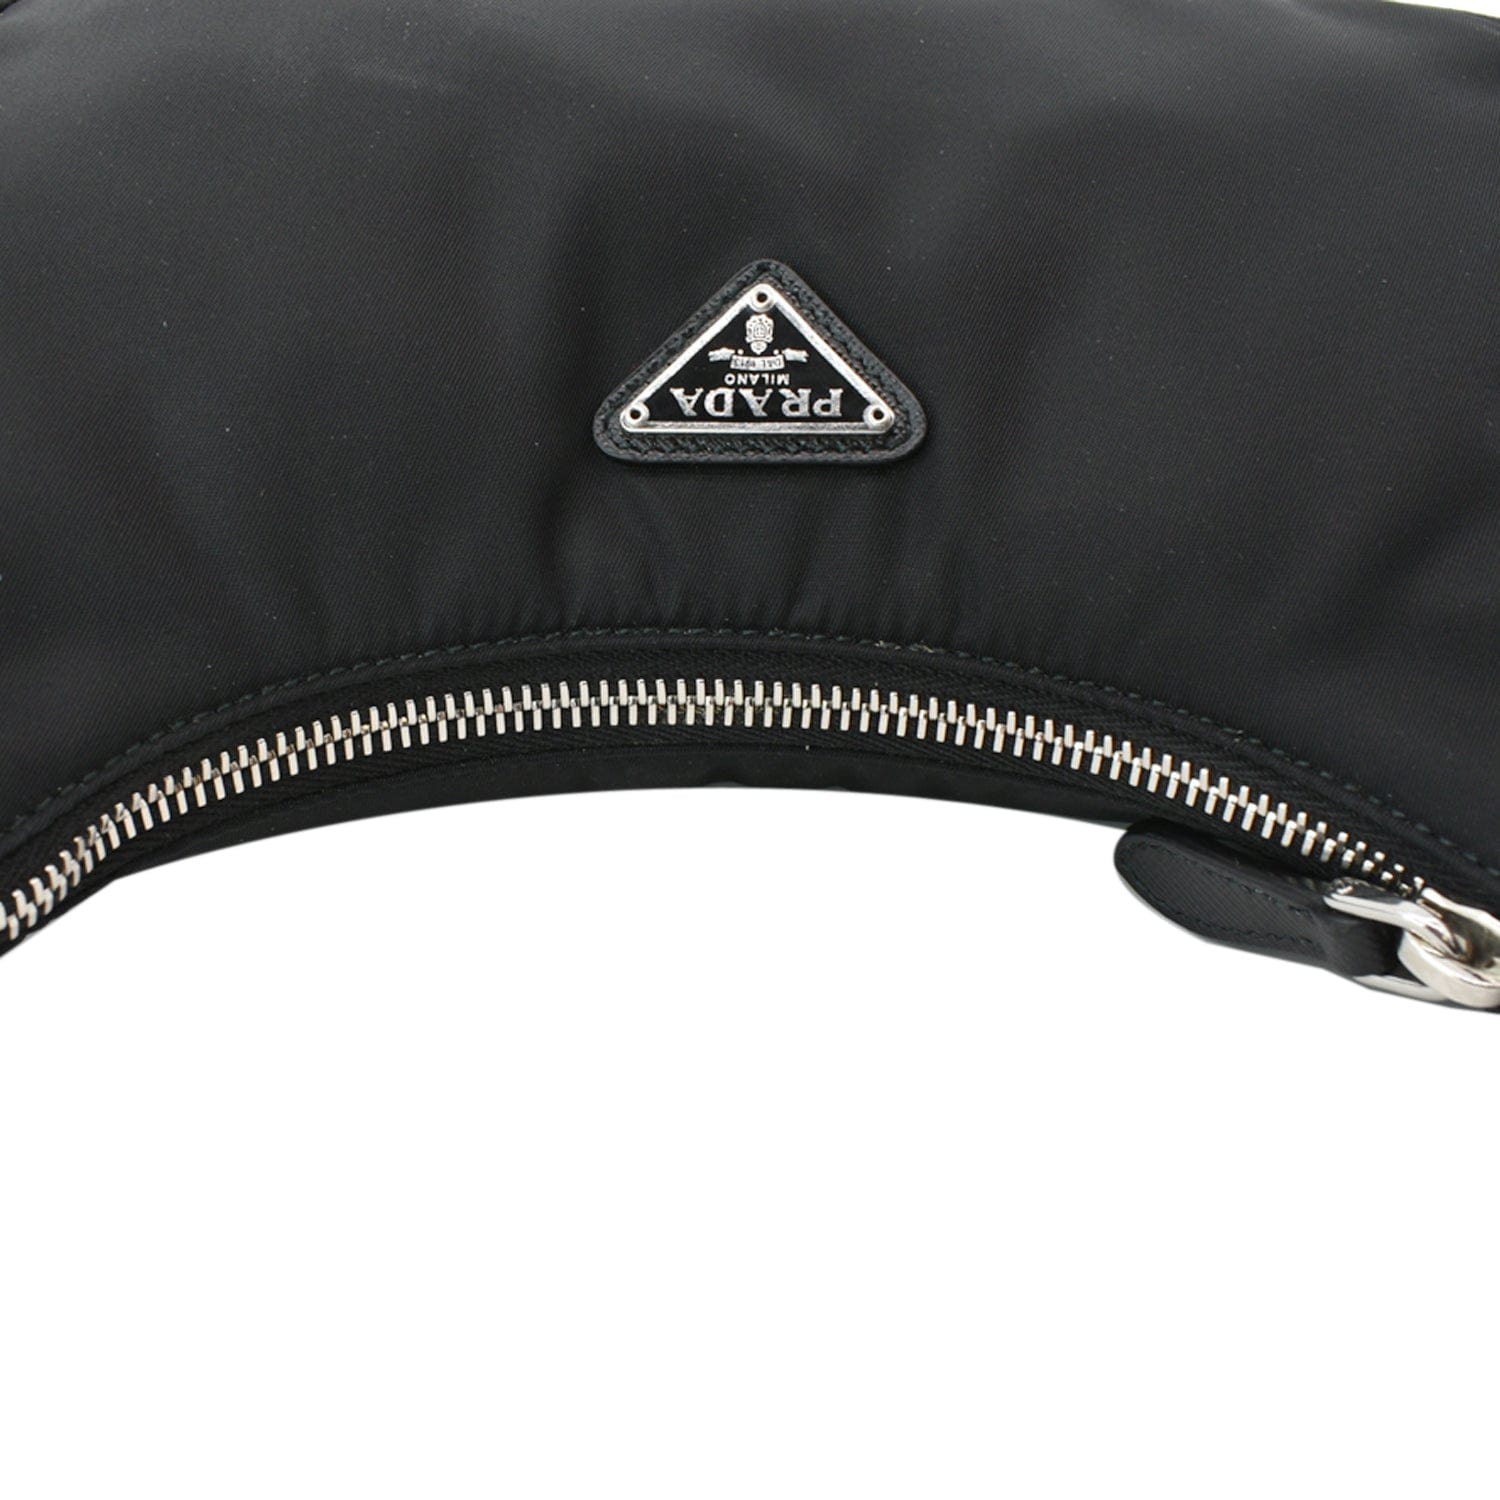 PRADA Re-Nylon Re-Edition 2005 Shoulder Bag Black 1298121